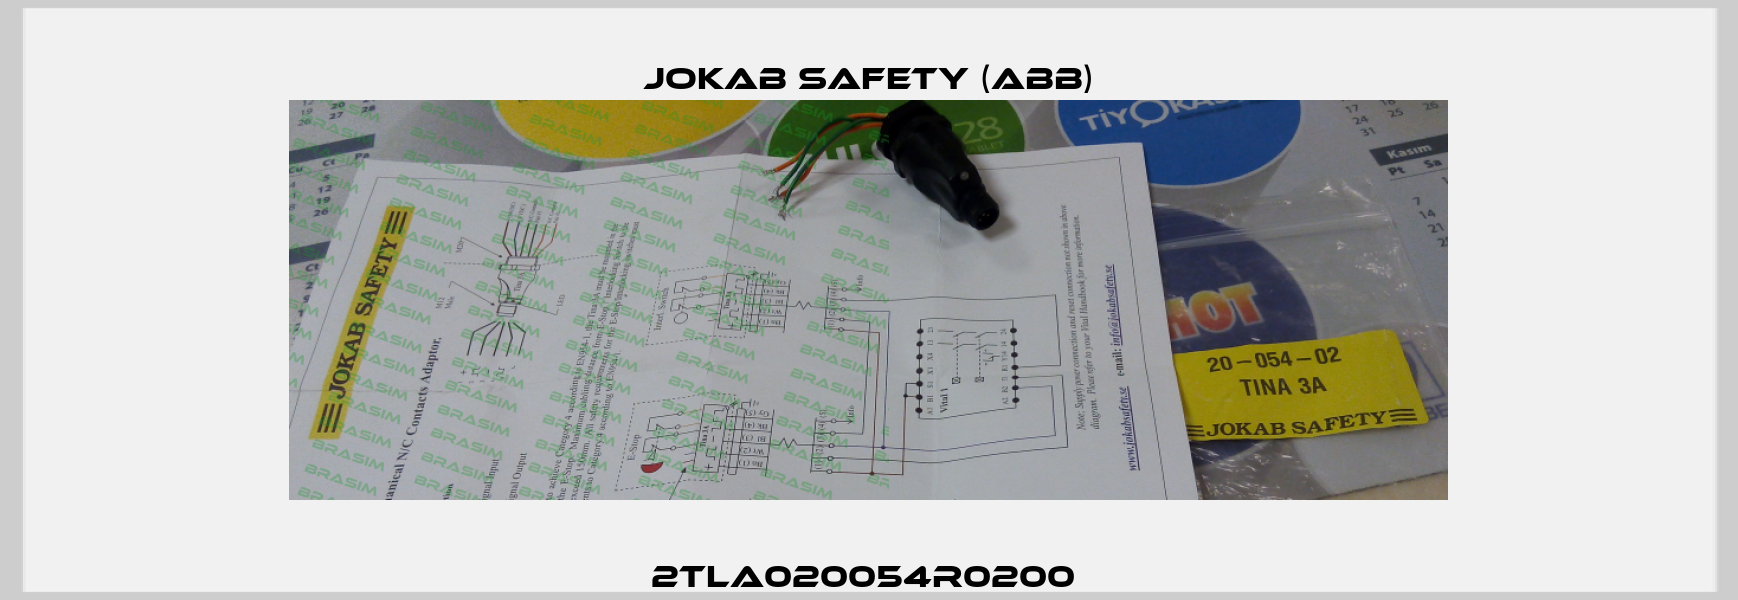 2TLA020054R0200  Jokab Safety (ABB)